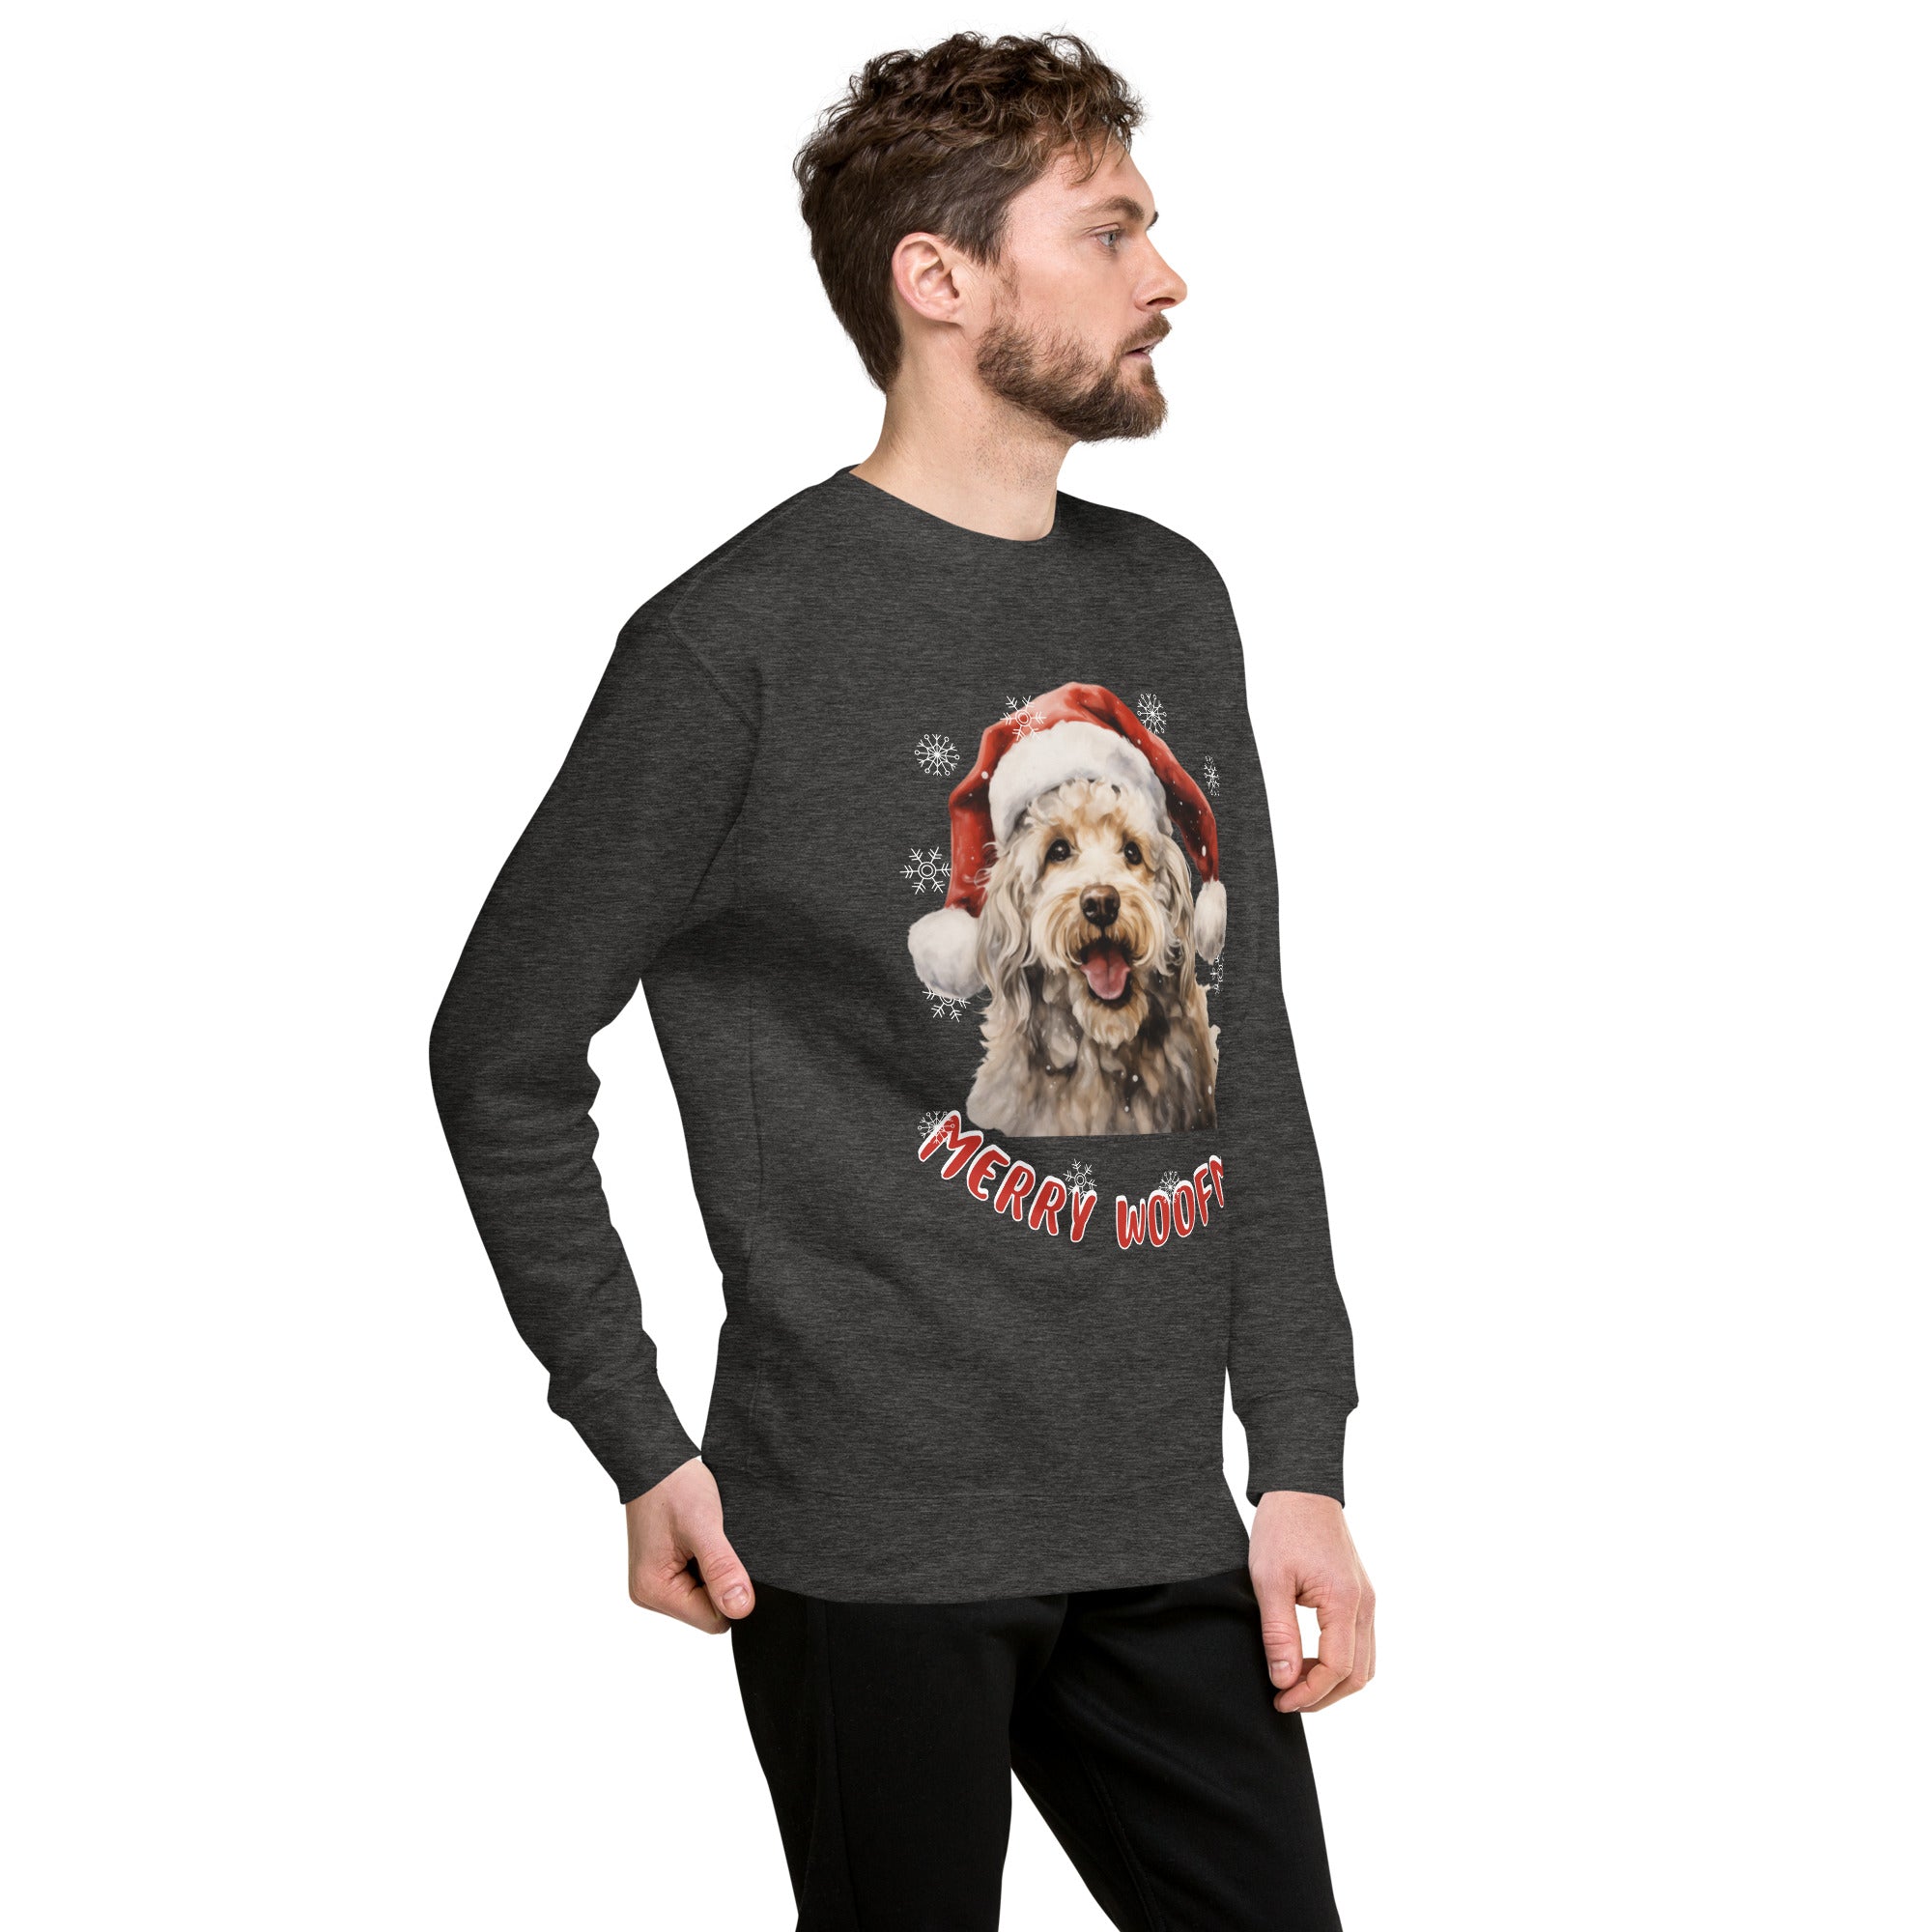 Unisex Premium Sweatshirt Poodle - Merry Woofmas